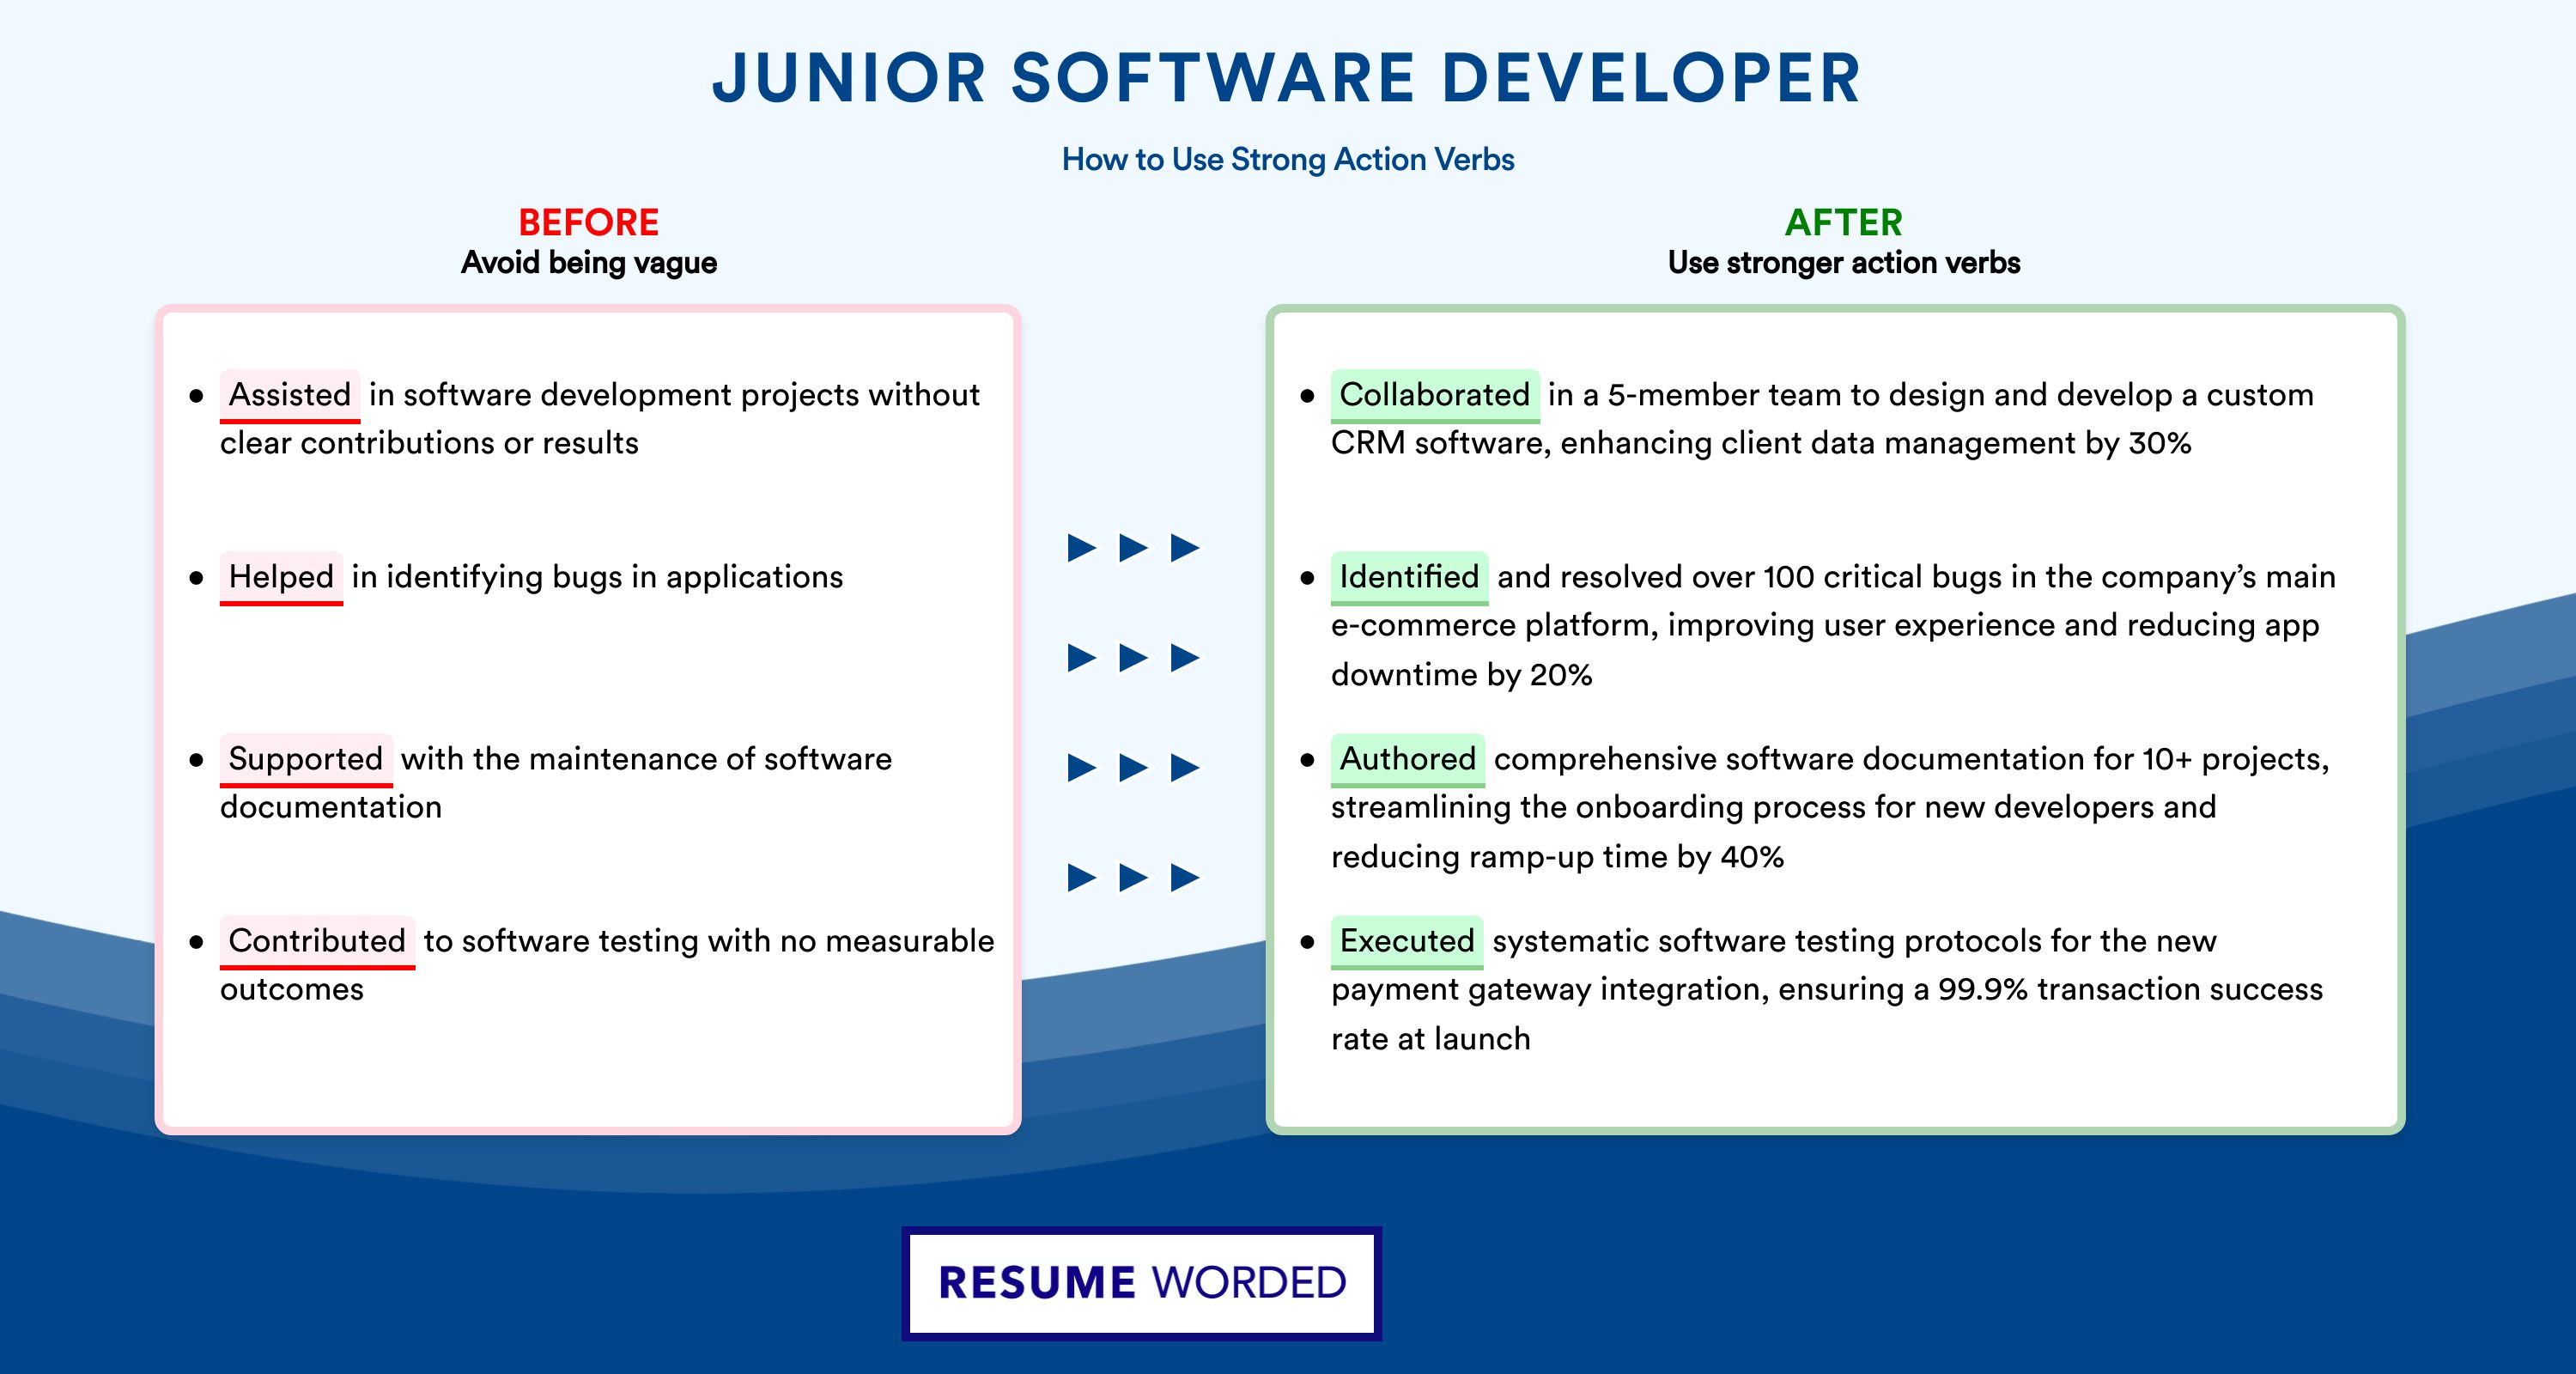 Action Verbs for Junior Software Developer